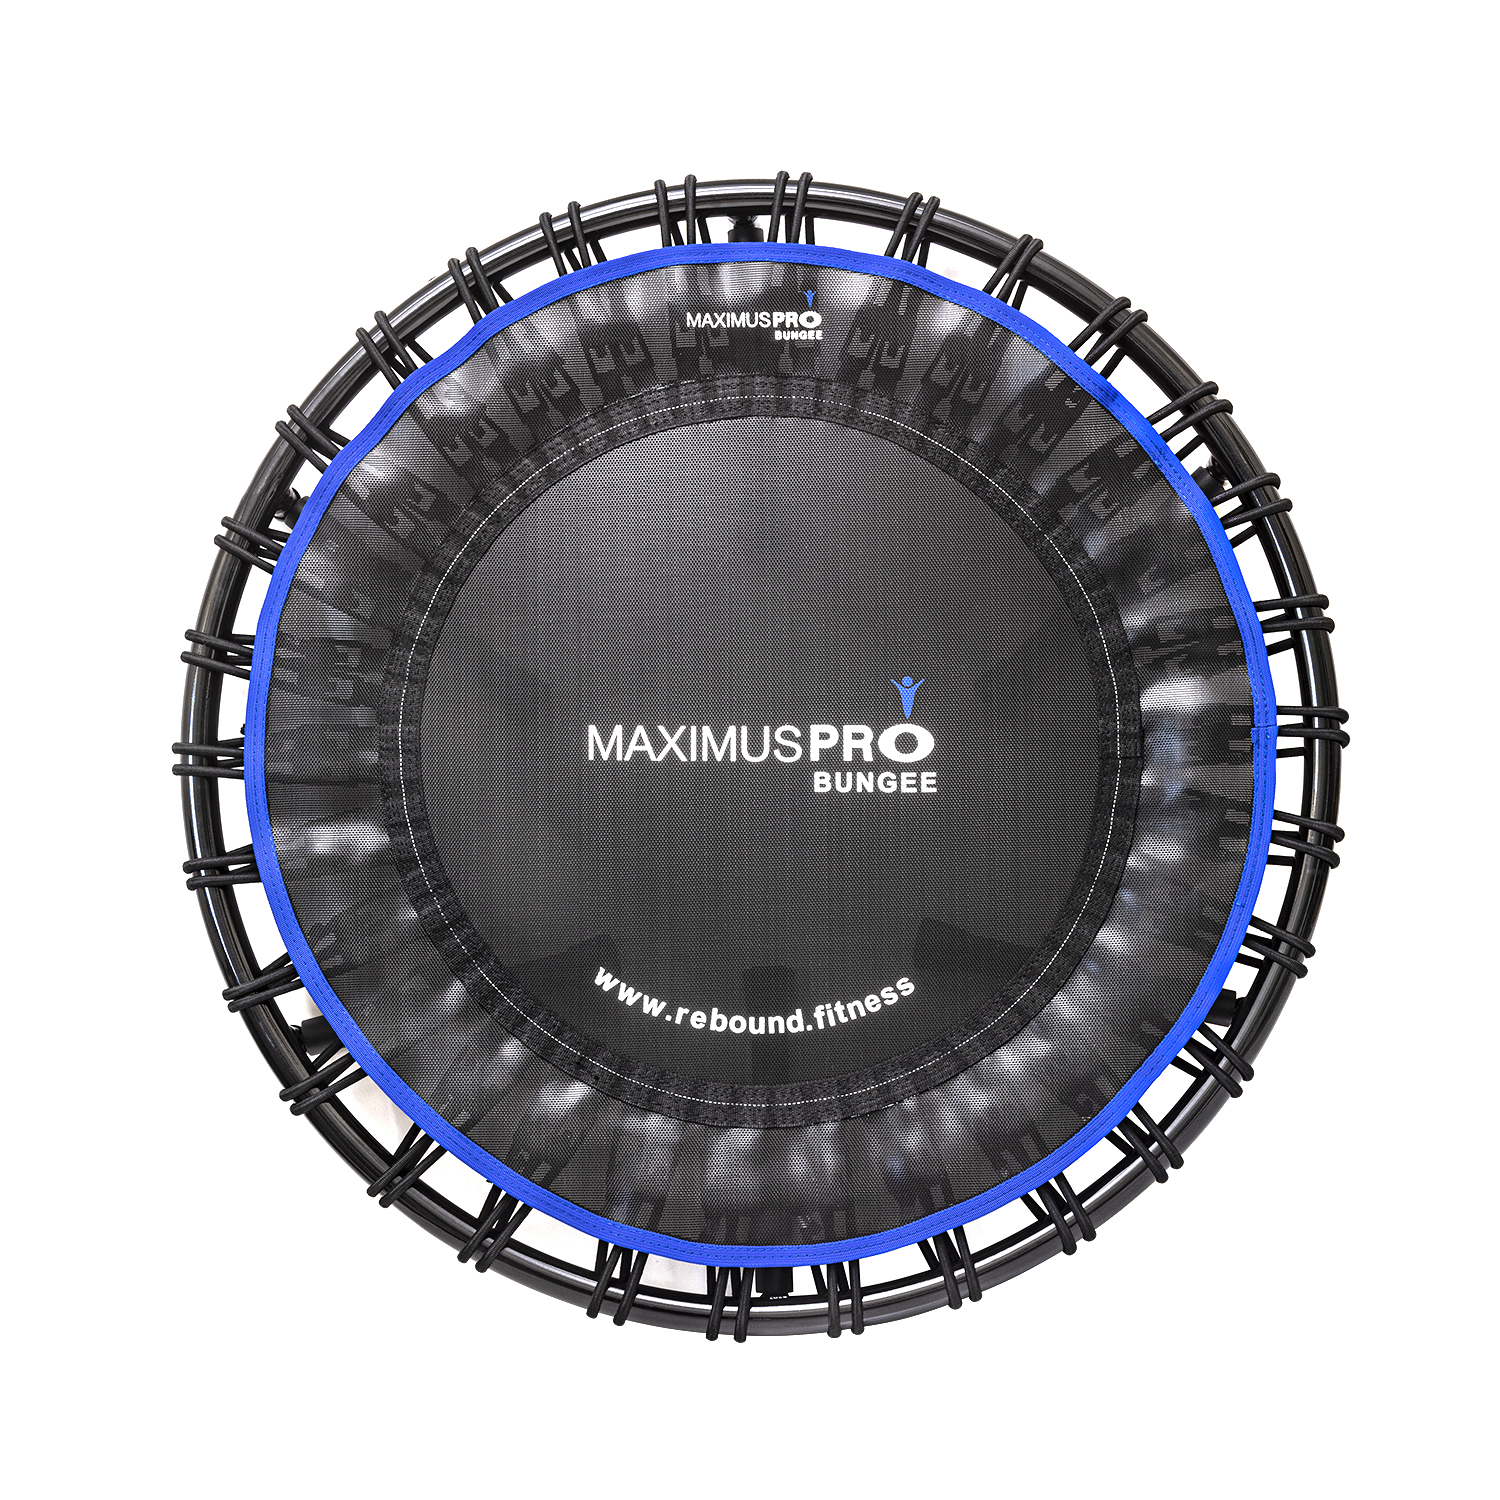 Maximus Pro Bungee Rebounder birds eye product shot